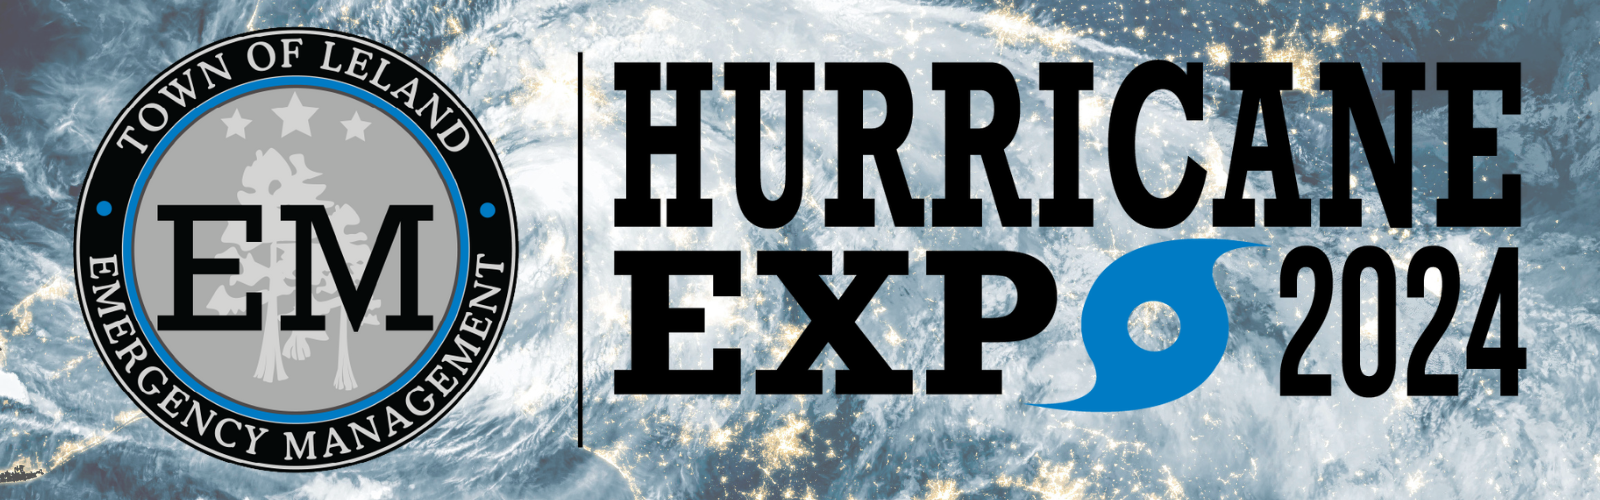 Hurricane Expo